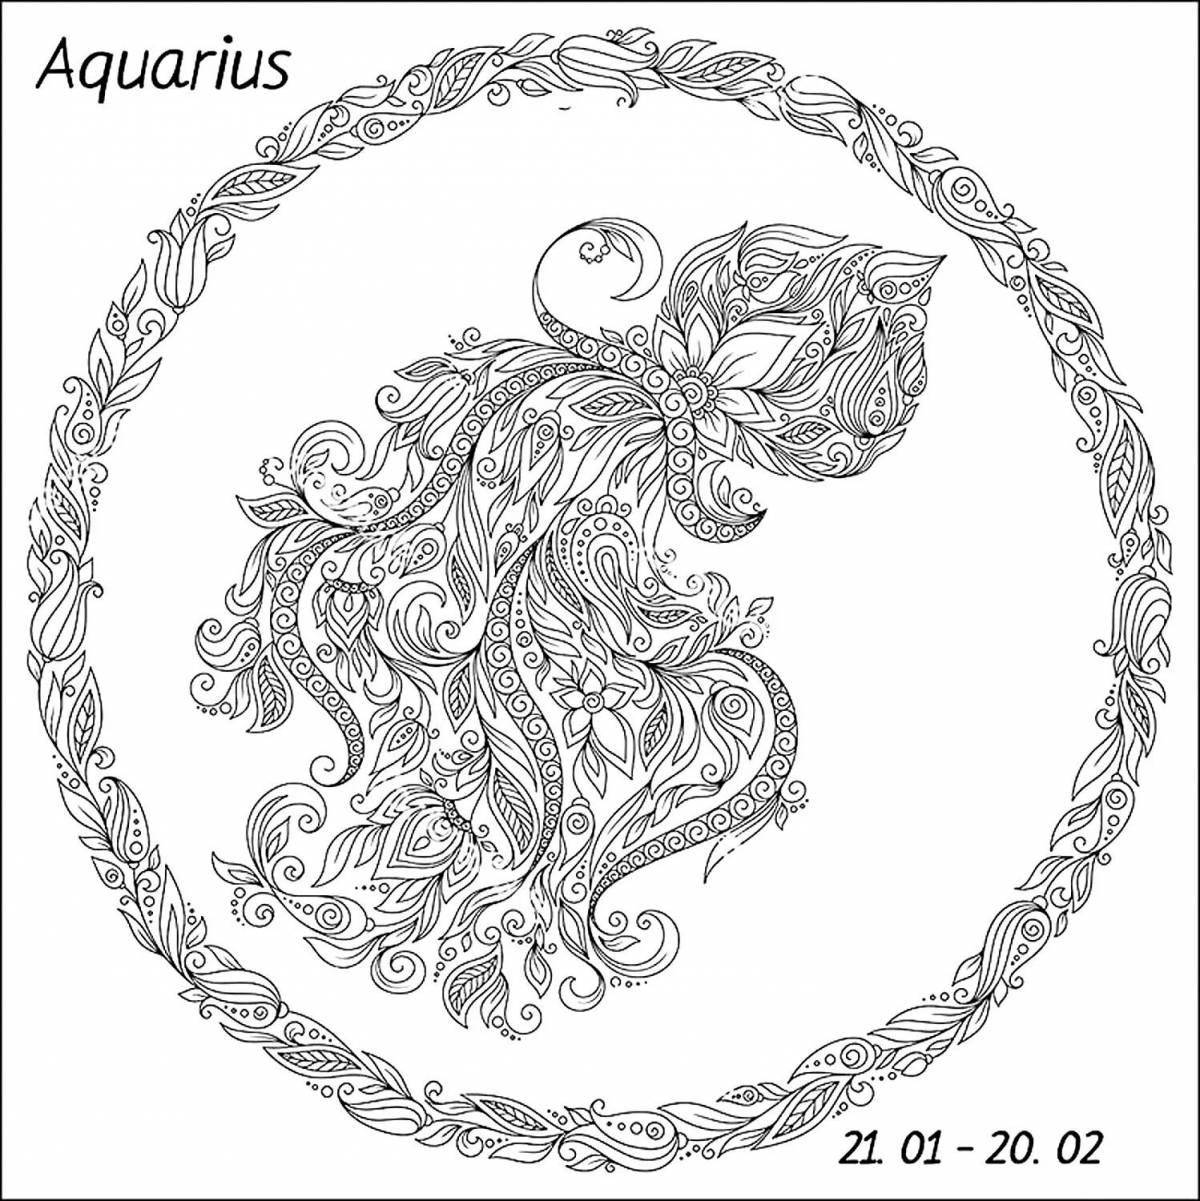 Dazzling coloring book of the zodiac sign Aquarius